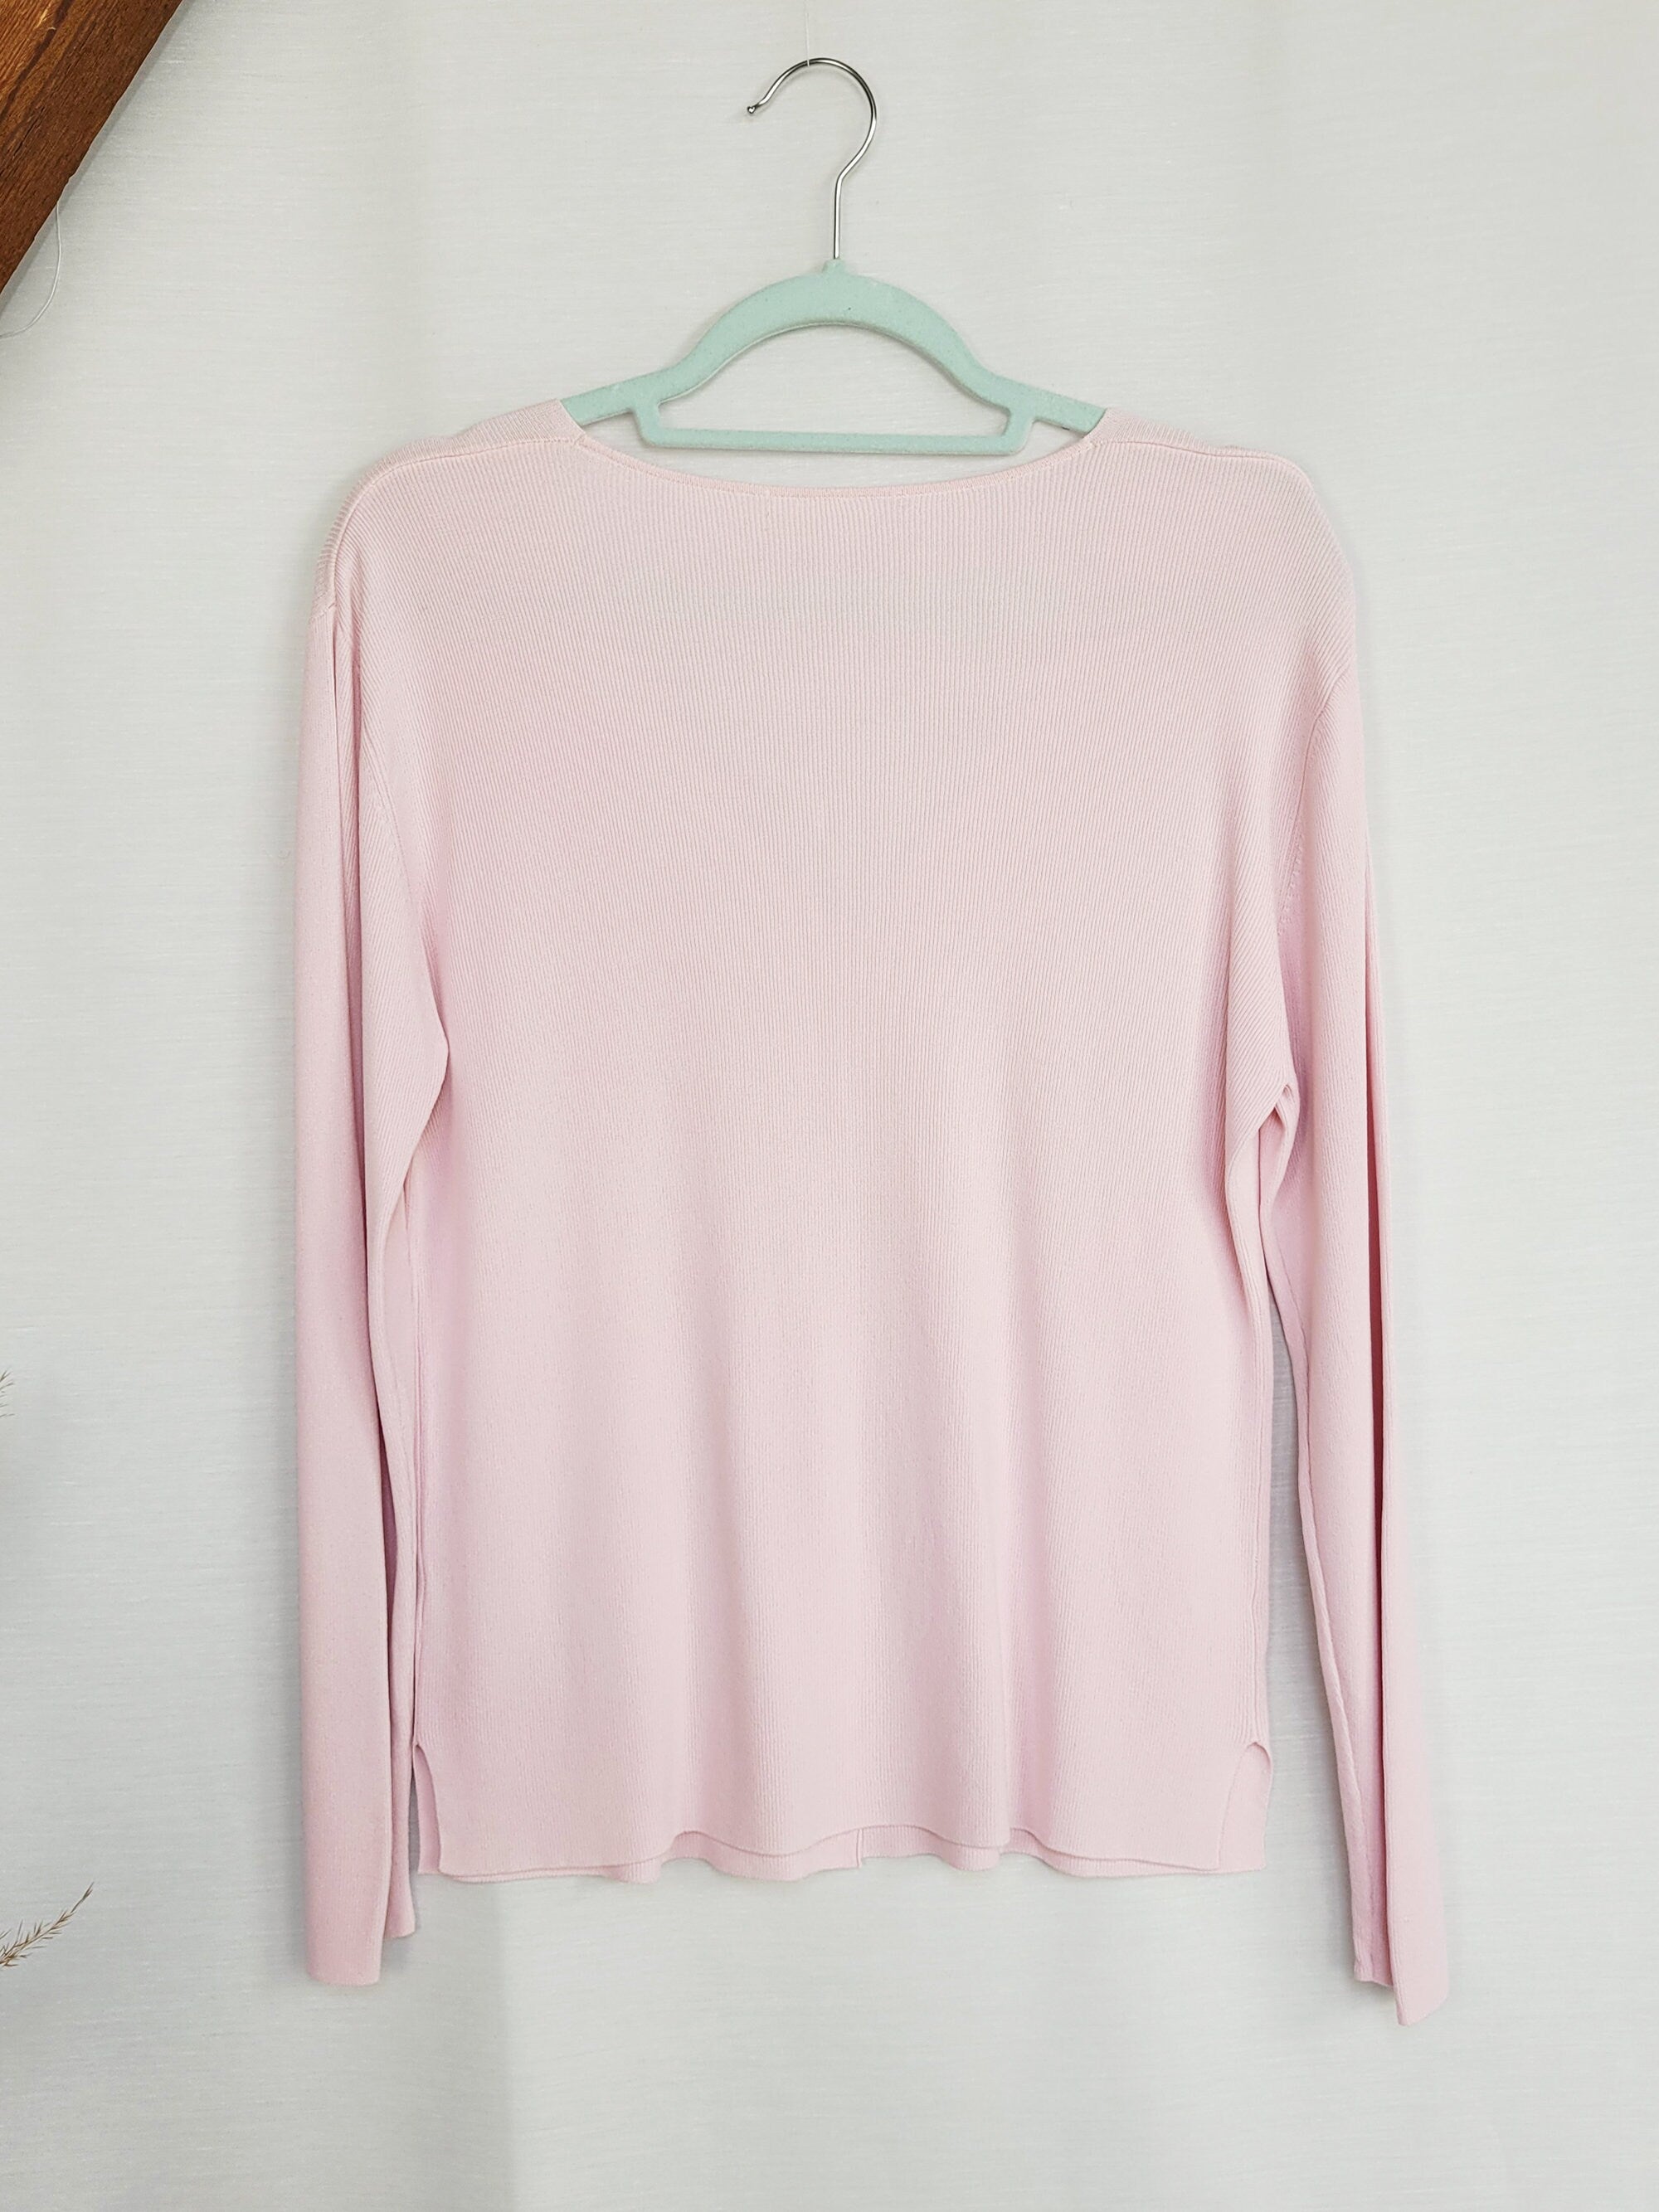 Vintage Y2K 00s pastel pink minimalist buttoned cardigan top